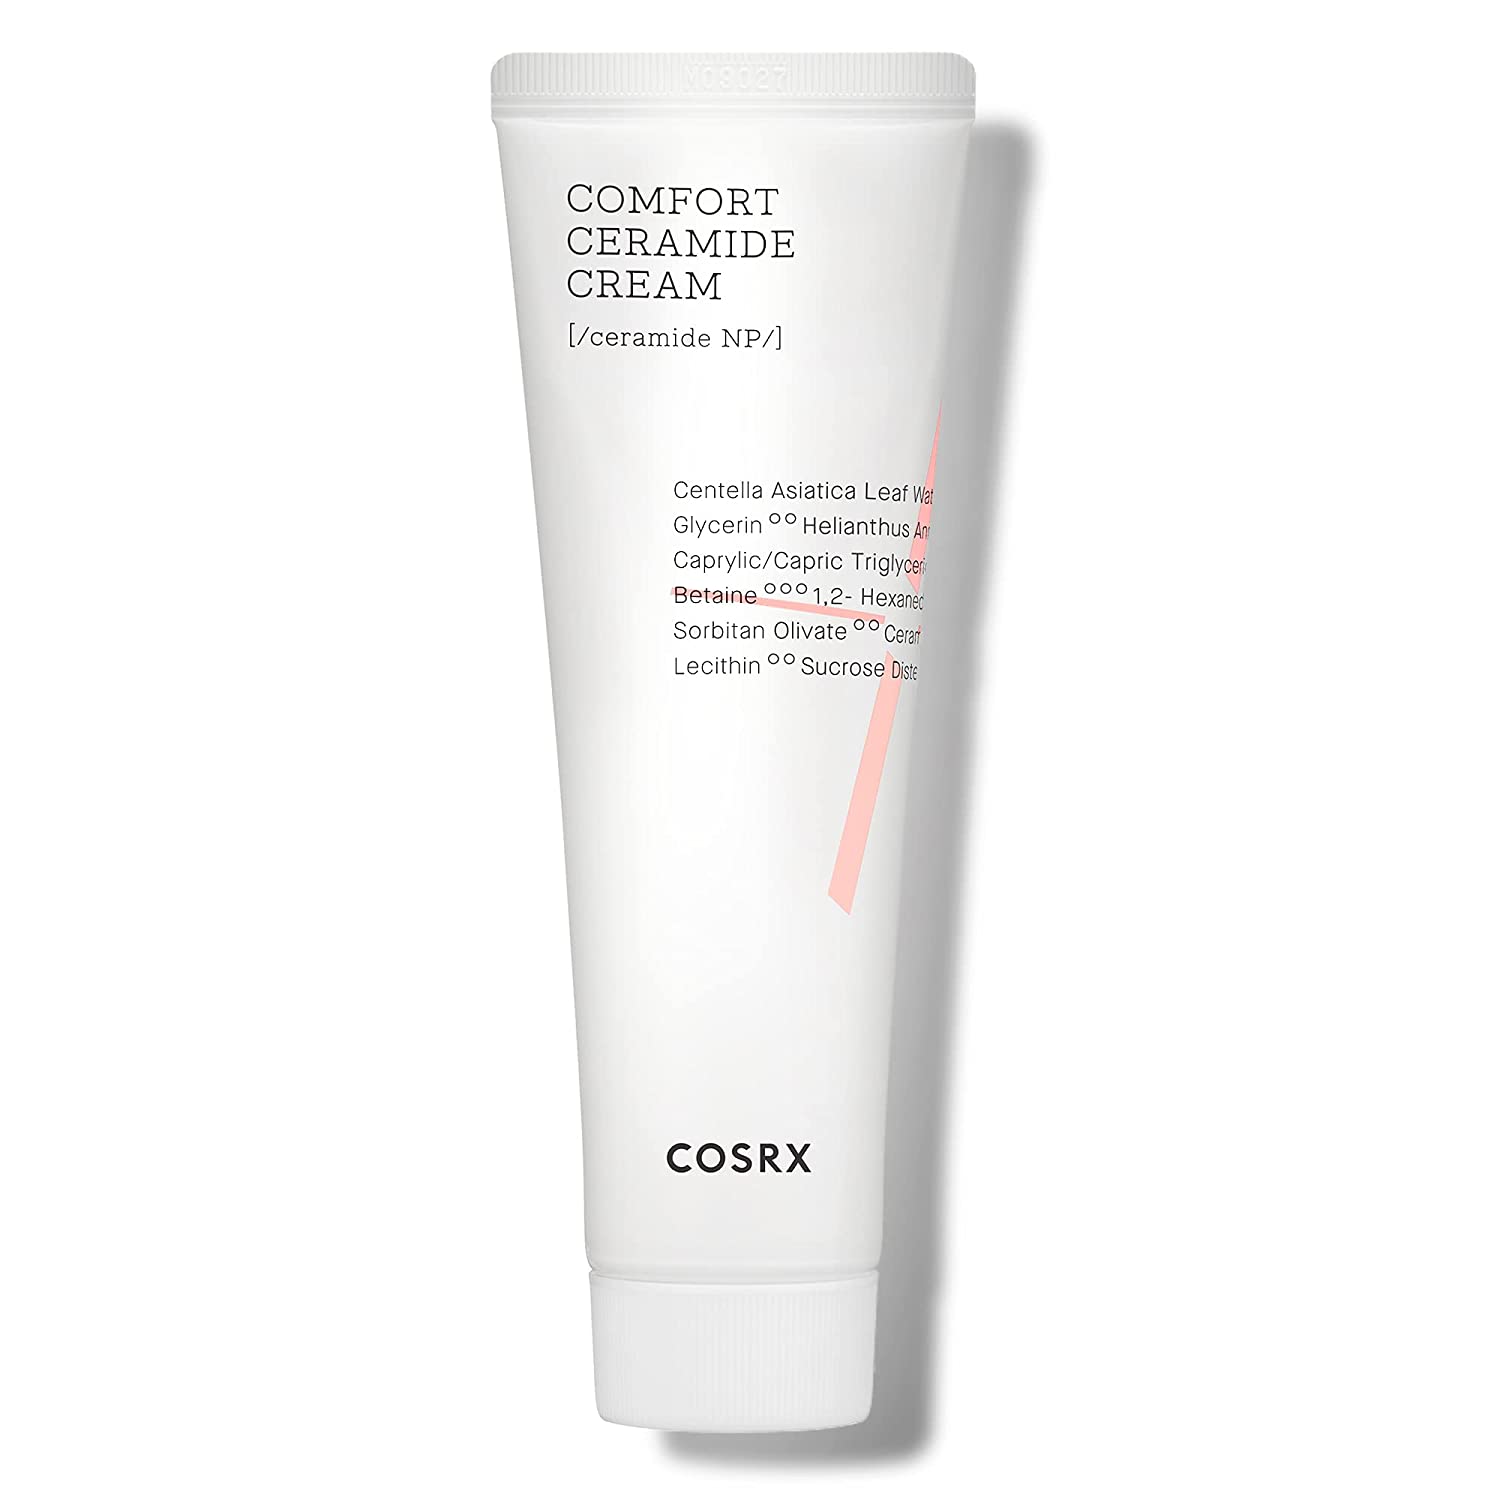 COSRX - Balancium Comfort Ceramide Cream 80g - كريم السيرمايد المريح من كوسراكس 80ج